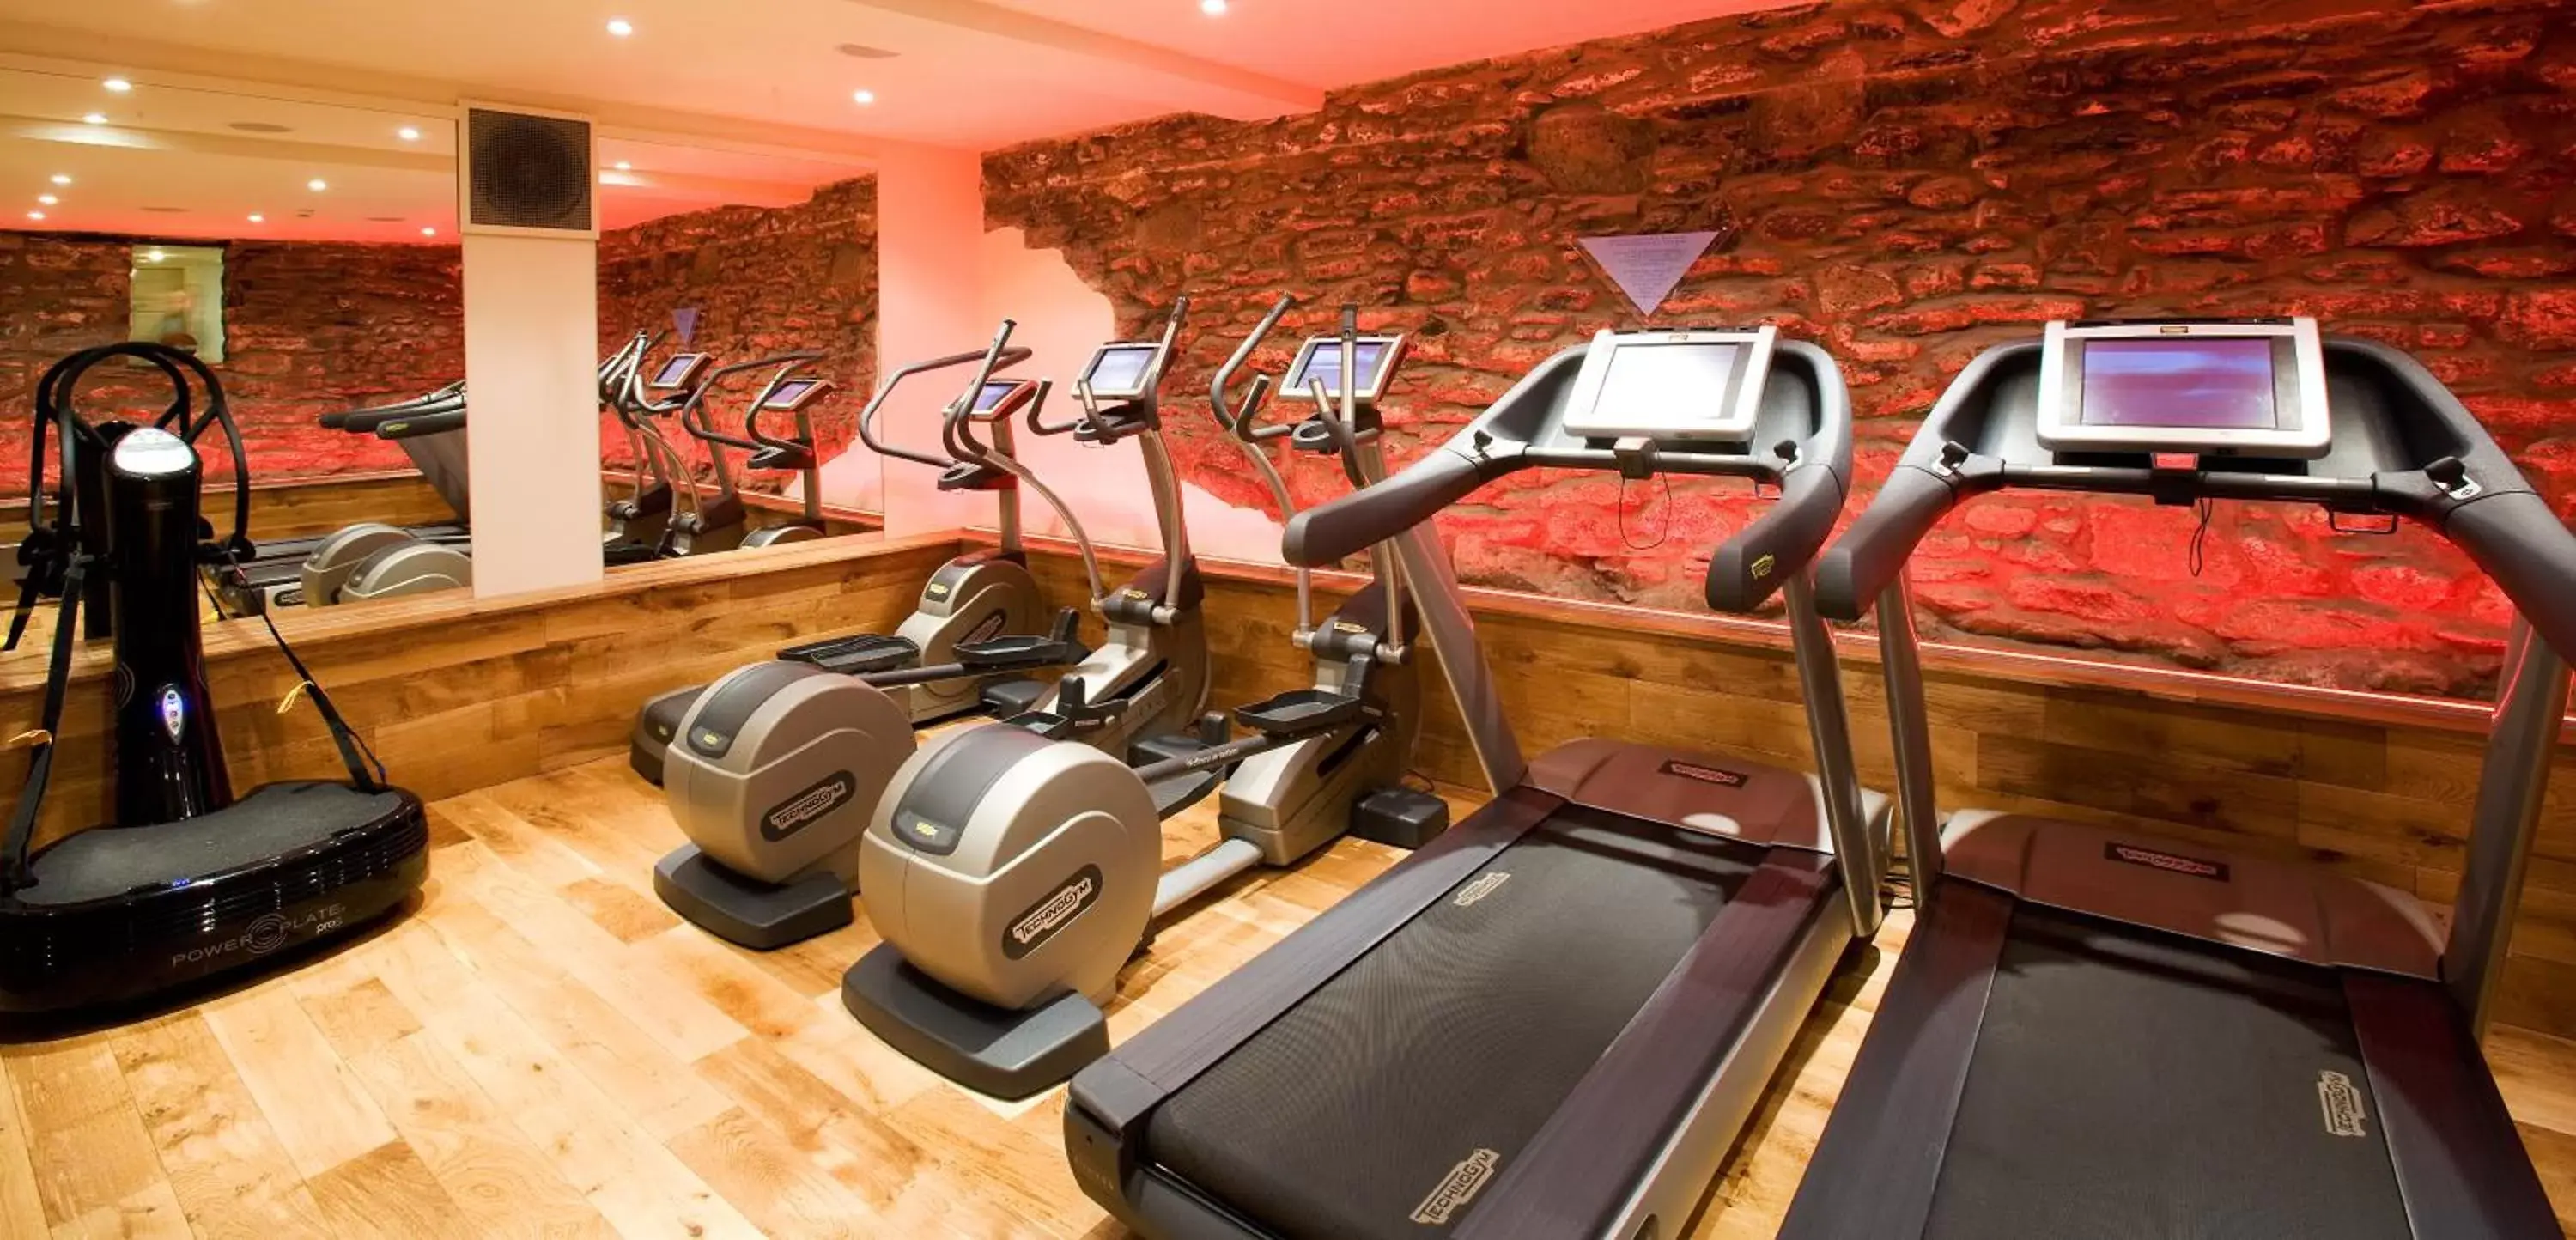 Fitness centre/facilities, Fitness Center/Facilities in Ambleside Salutation Hotel & Spa, World Hotel Distinctive